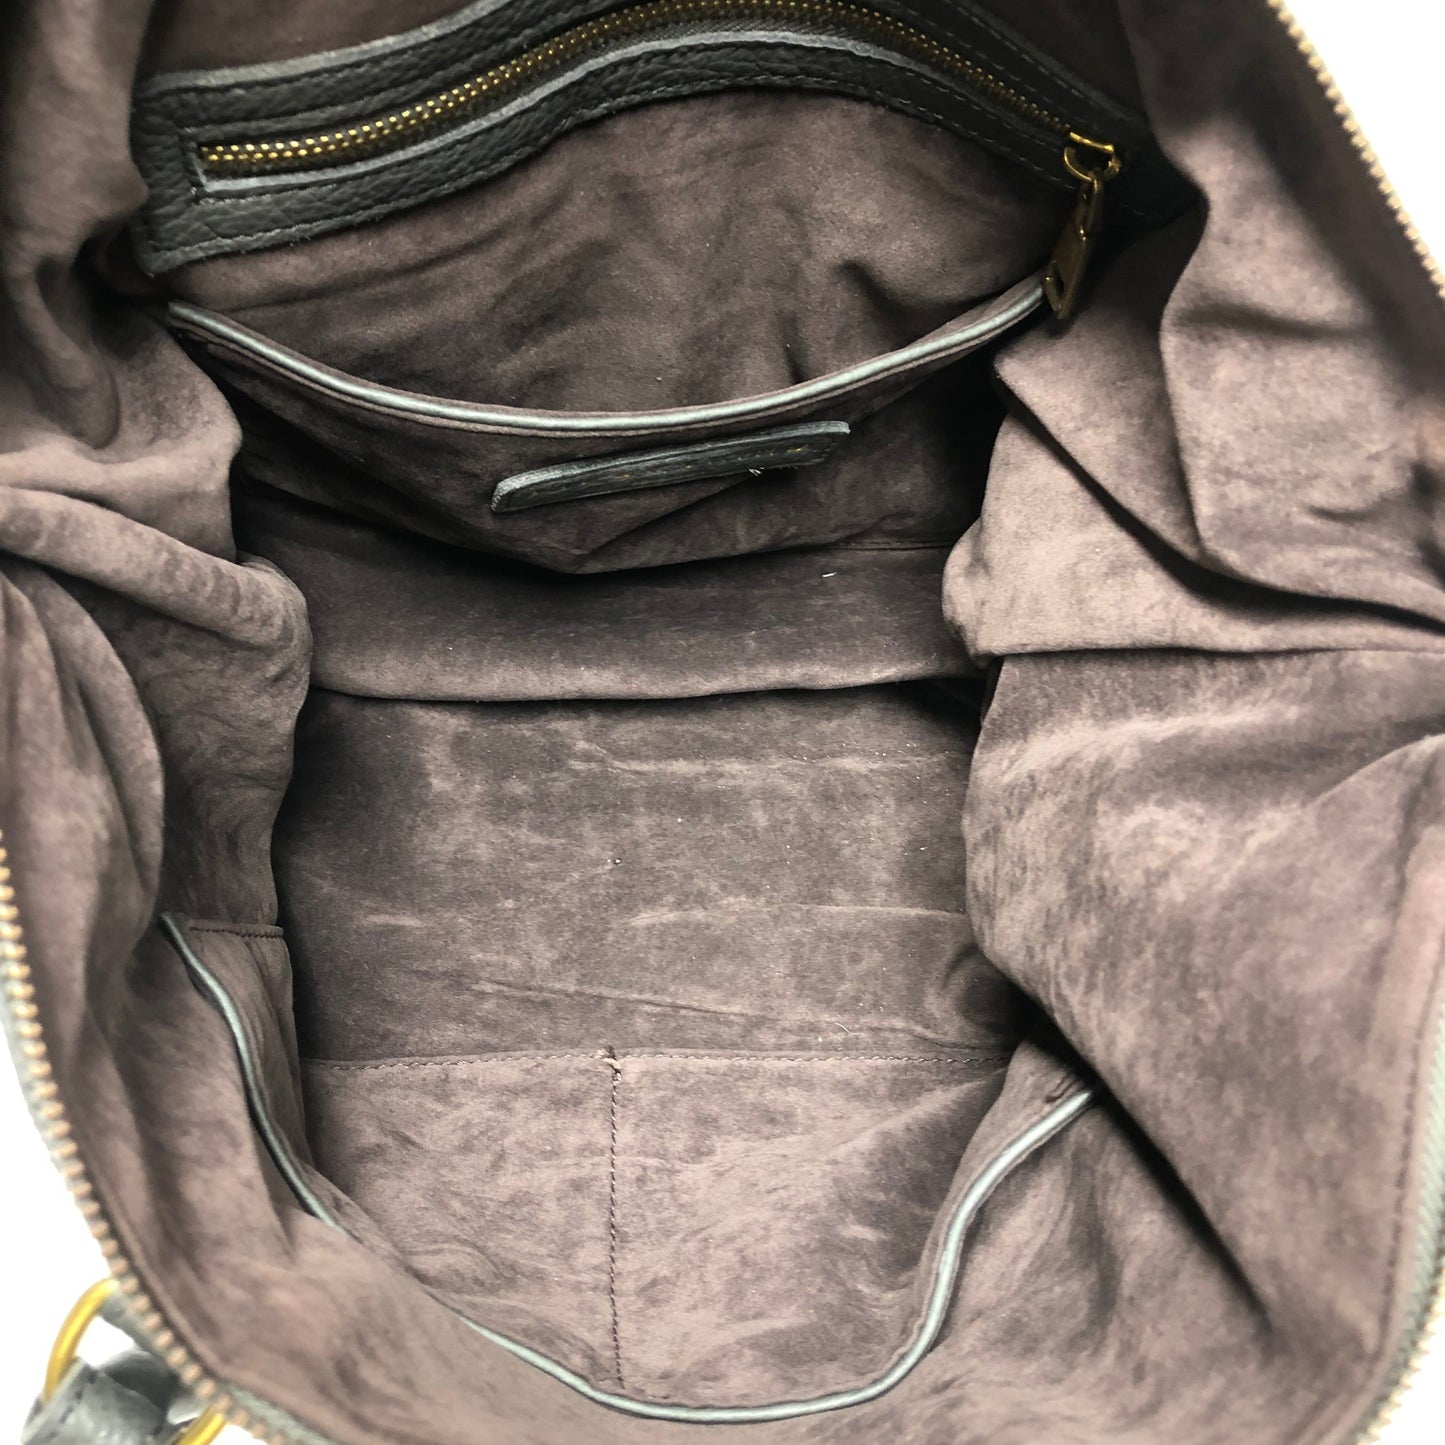 Handbag Leather By Liebeskind  Size: Large